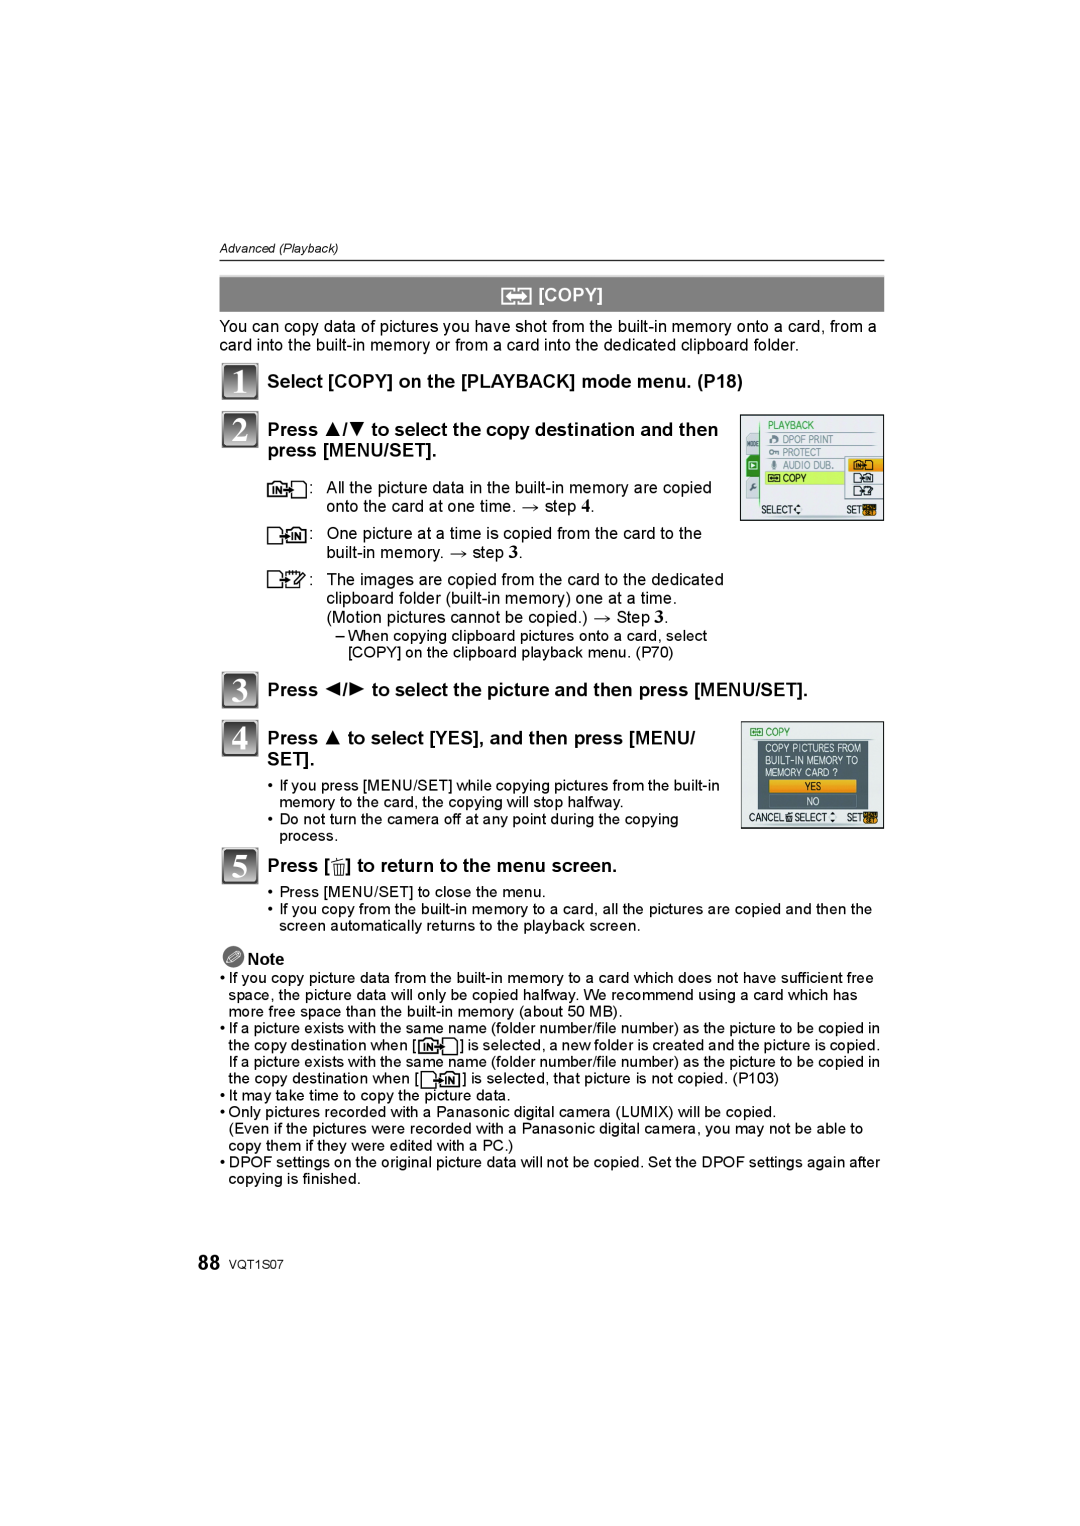 Panasonic DMC-FX38 S Copy, Select COPY on the PLAYBACK mode menu. P18, Press 3 to select YES, and then press MENU 